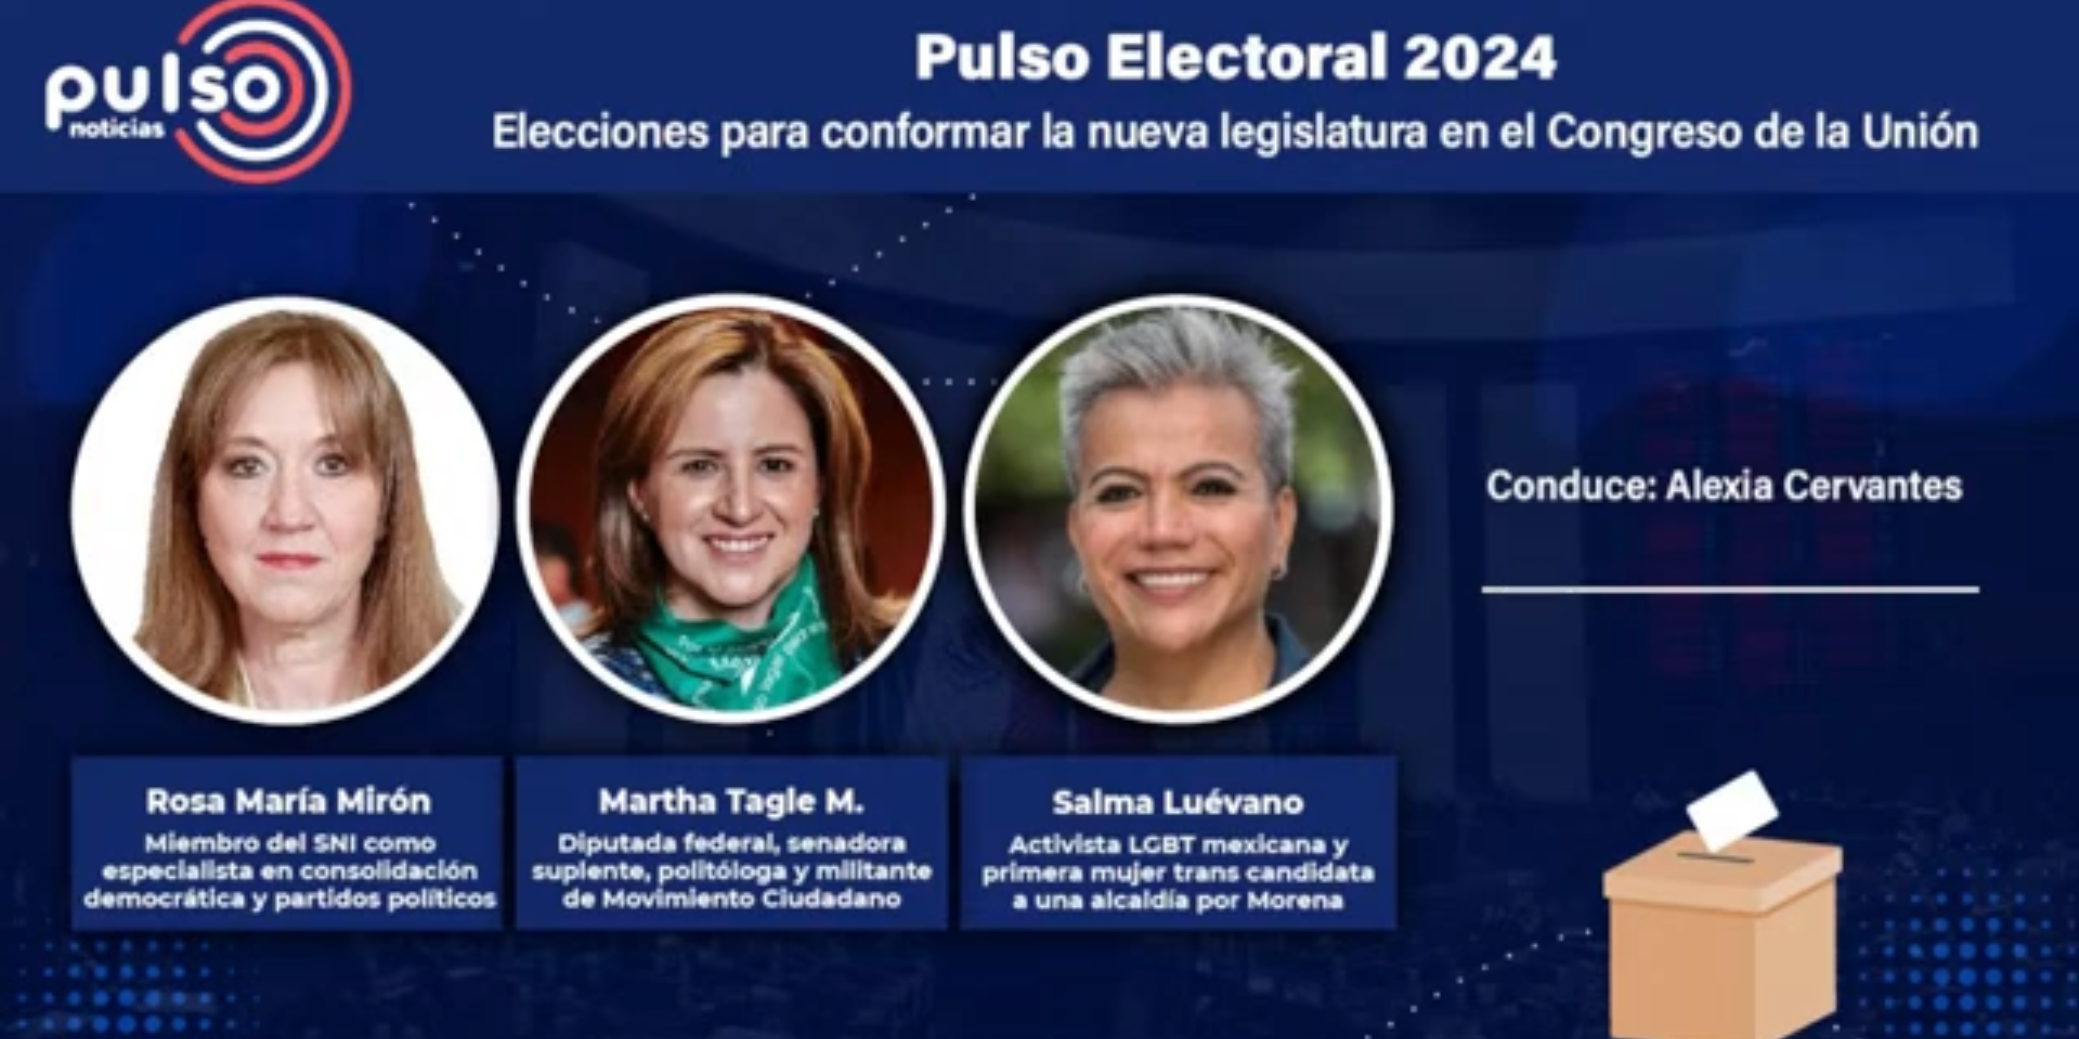 Pulso Electoral 2024: Congressional Races in Mexico